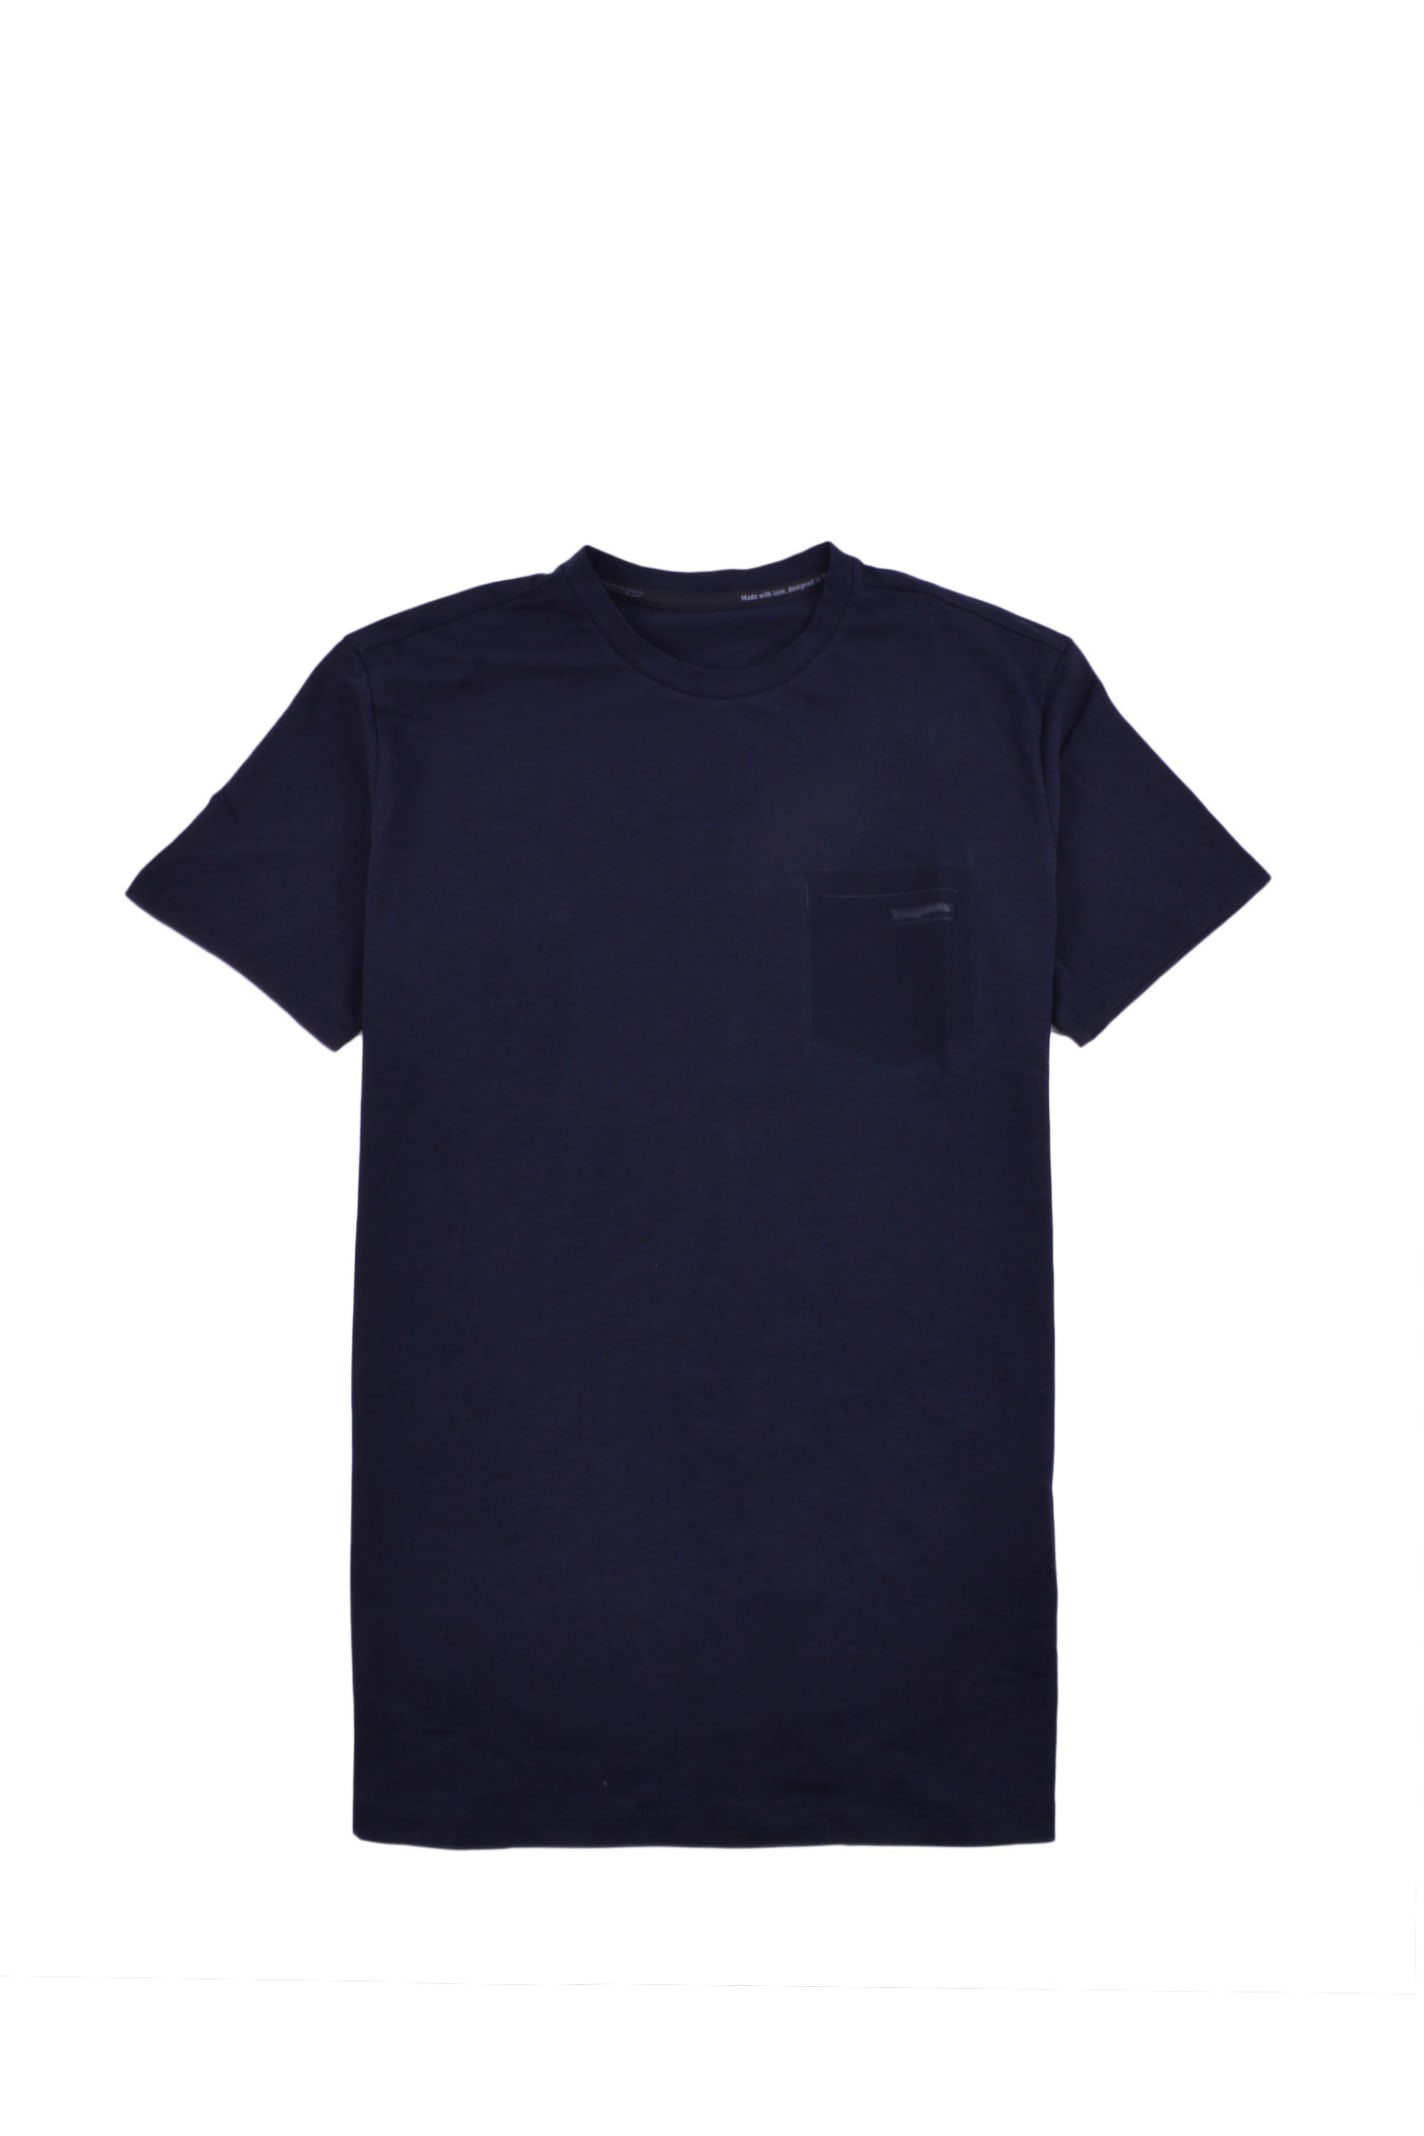 Rrd - Roberto Ricci Design T-shirt In Blue Black